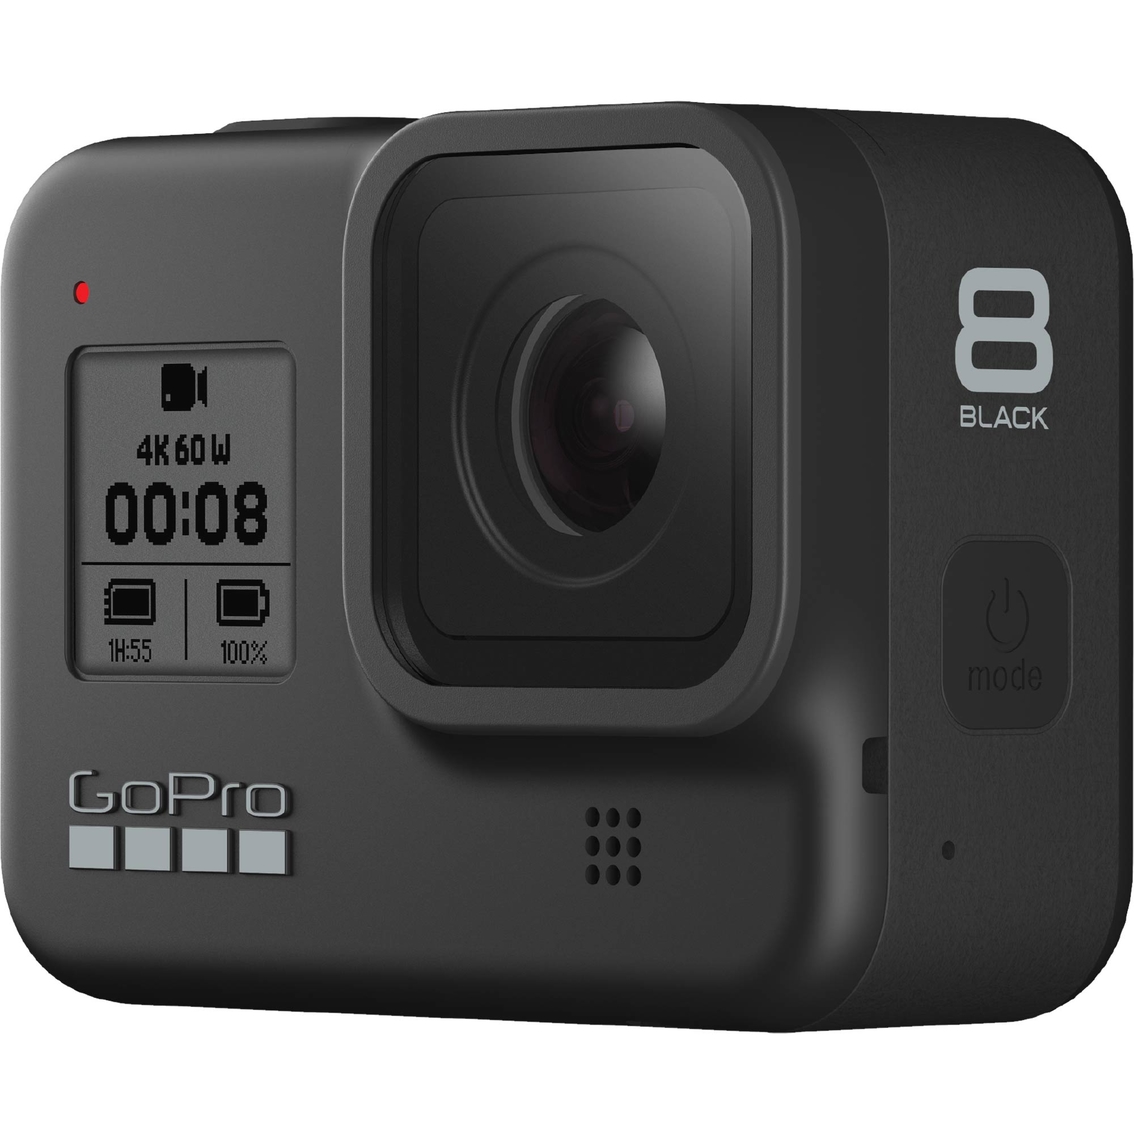 GoPro HERO8 Black Action Camera - Image 2 of 2